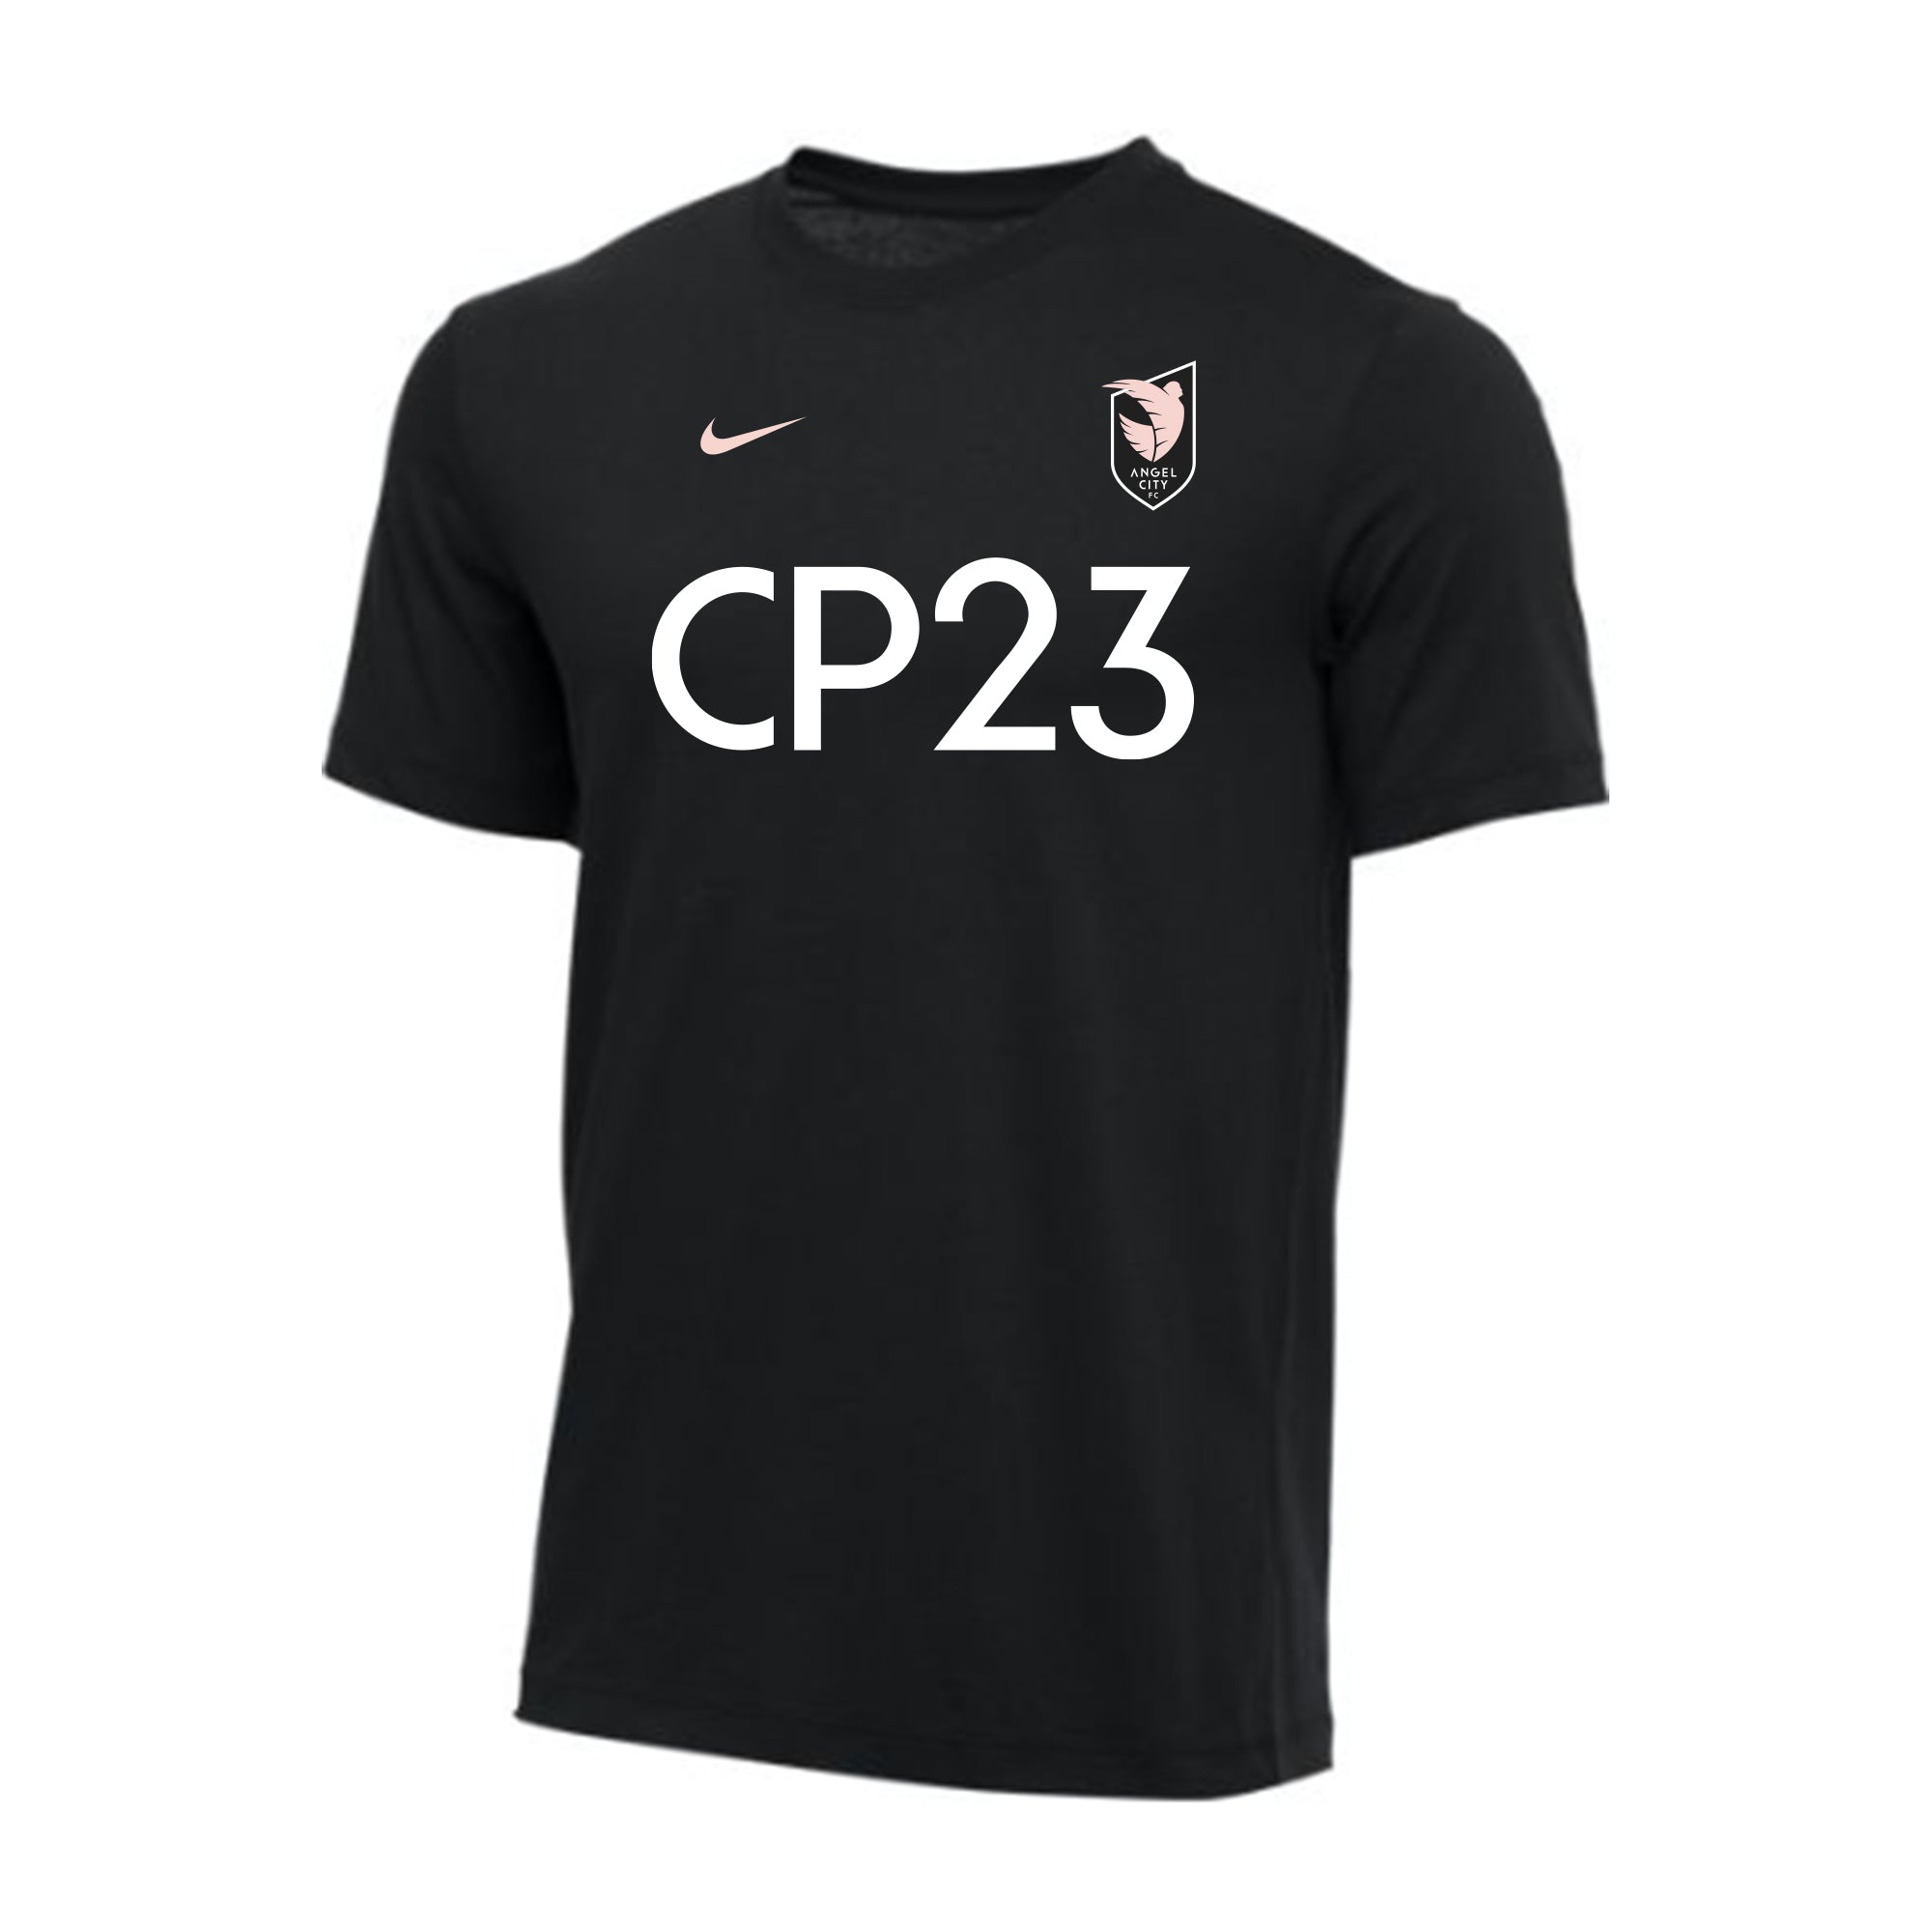 Angel City FC Nike Youth CP23 camiseta negra de manga corta